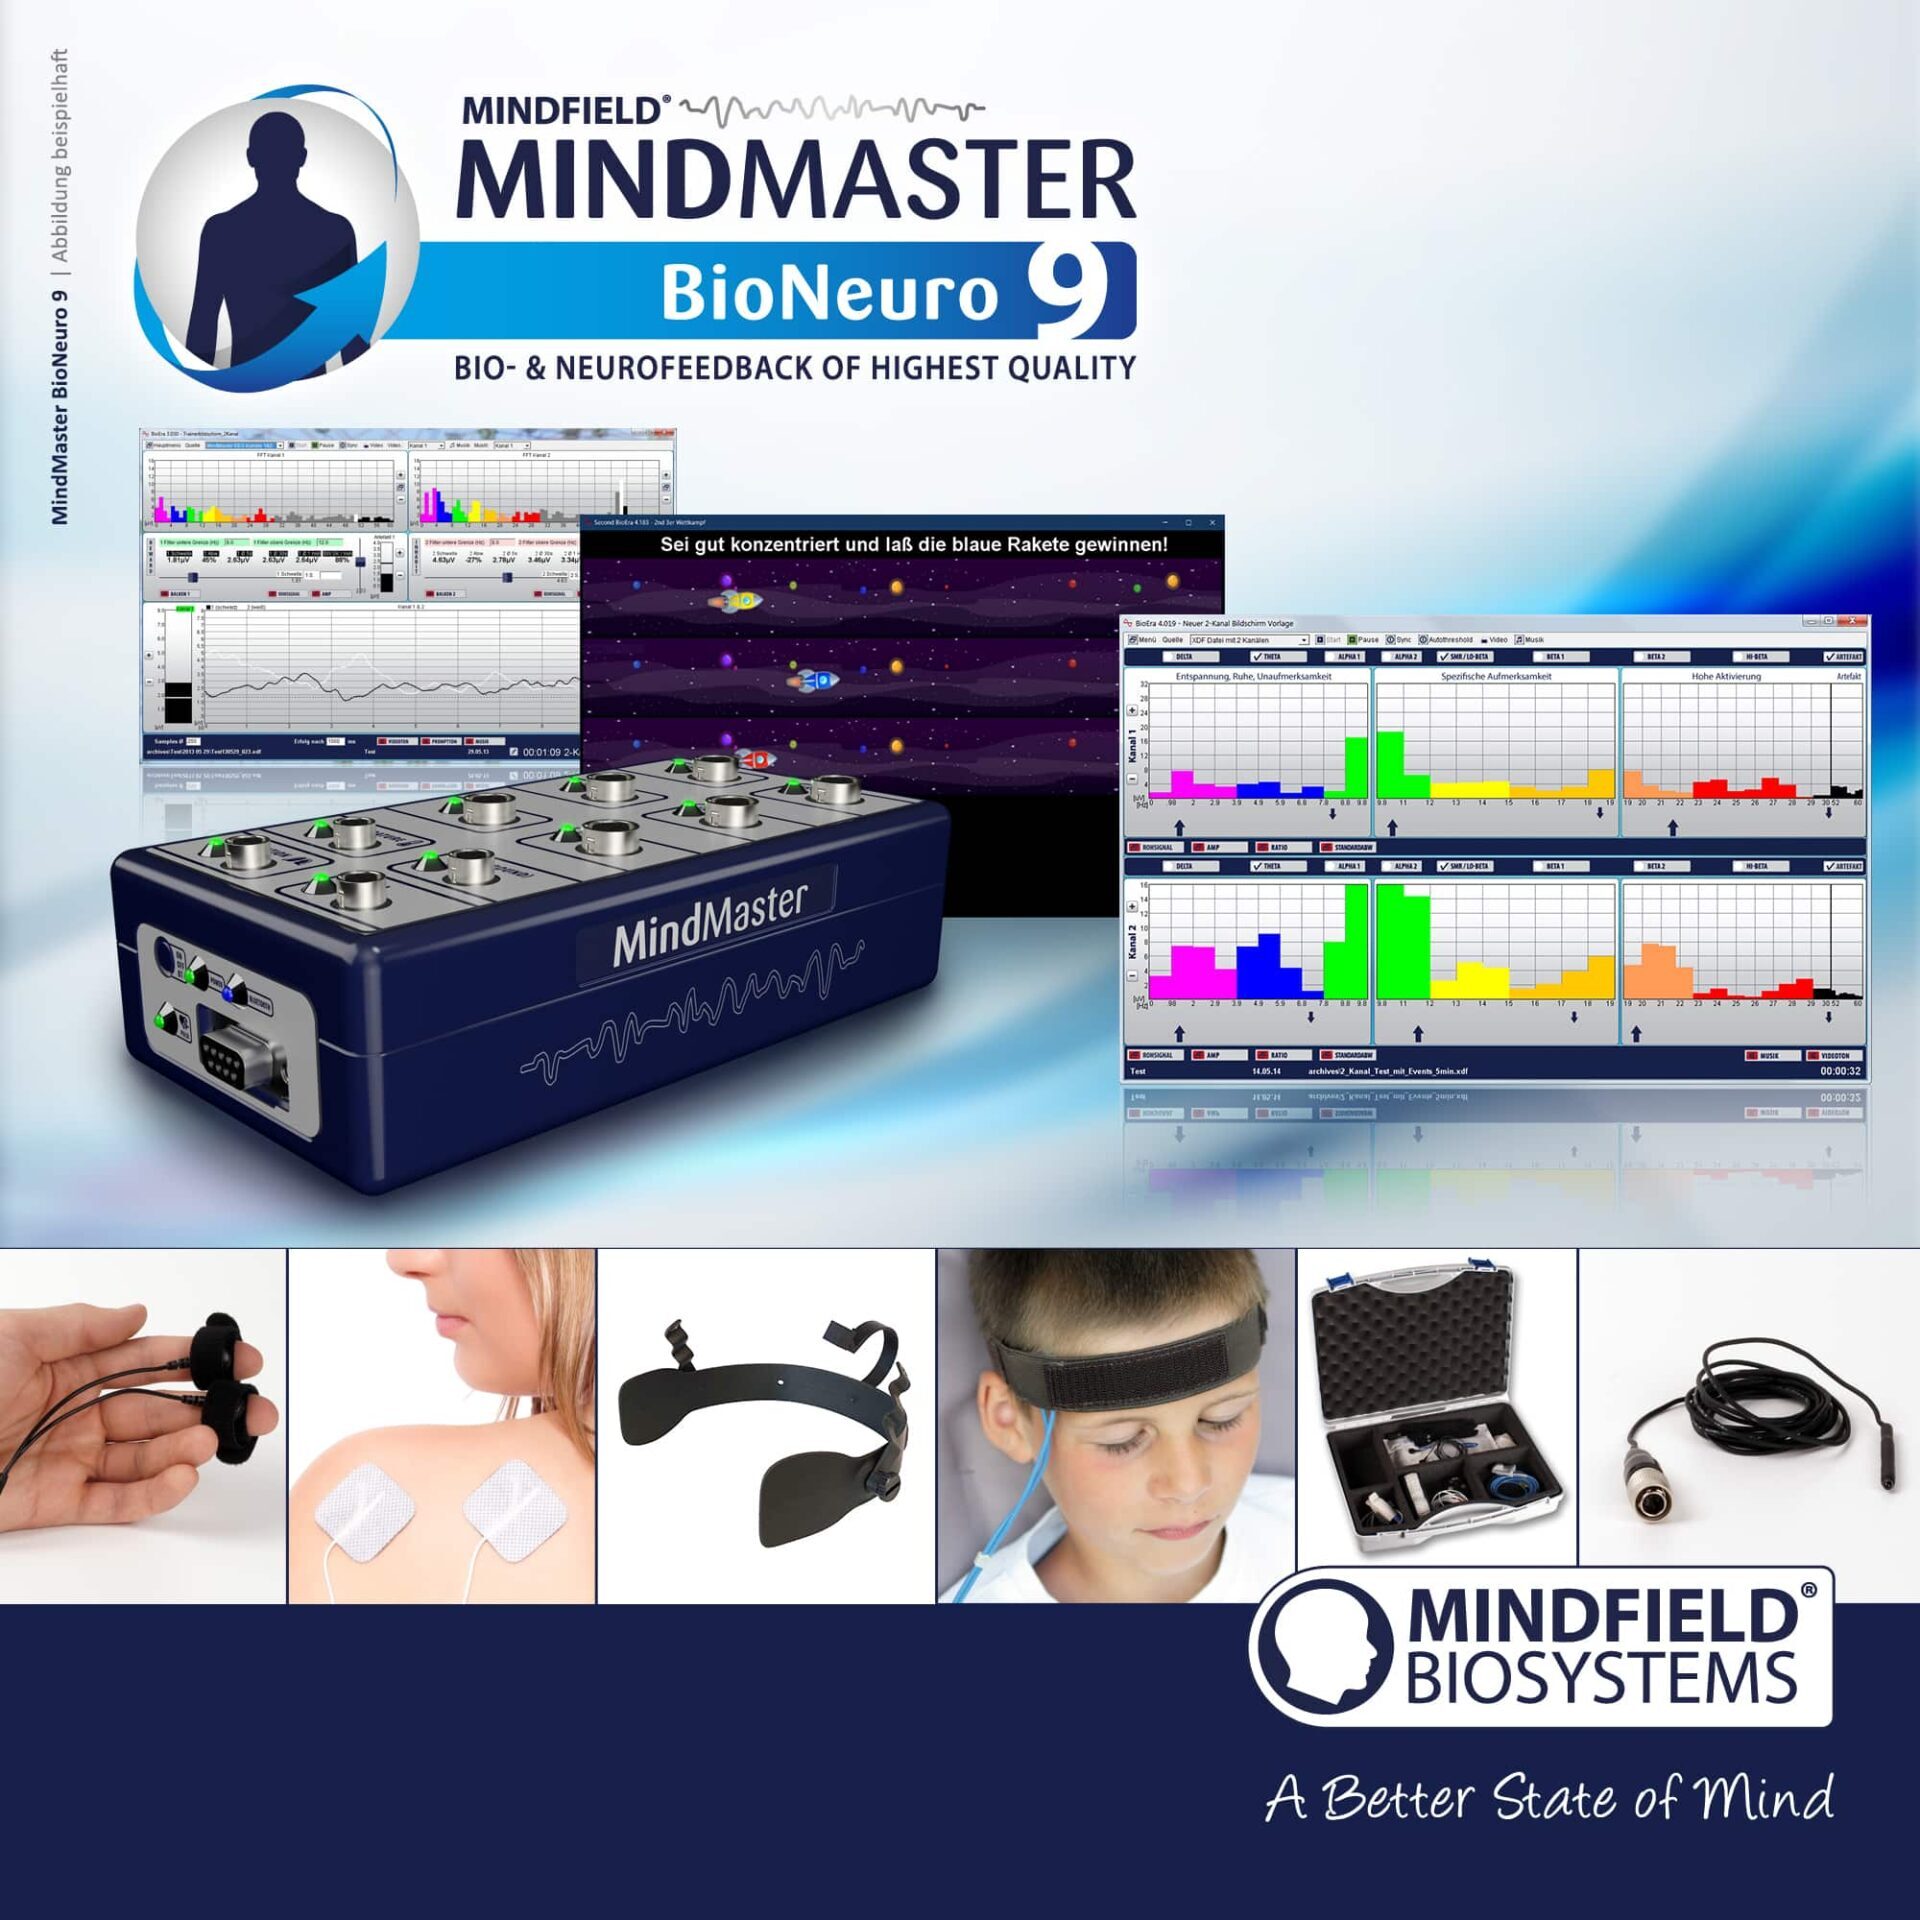 Mindfield-MindMaster-BioNeuro-9